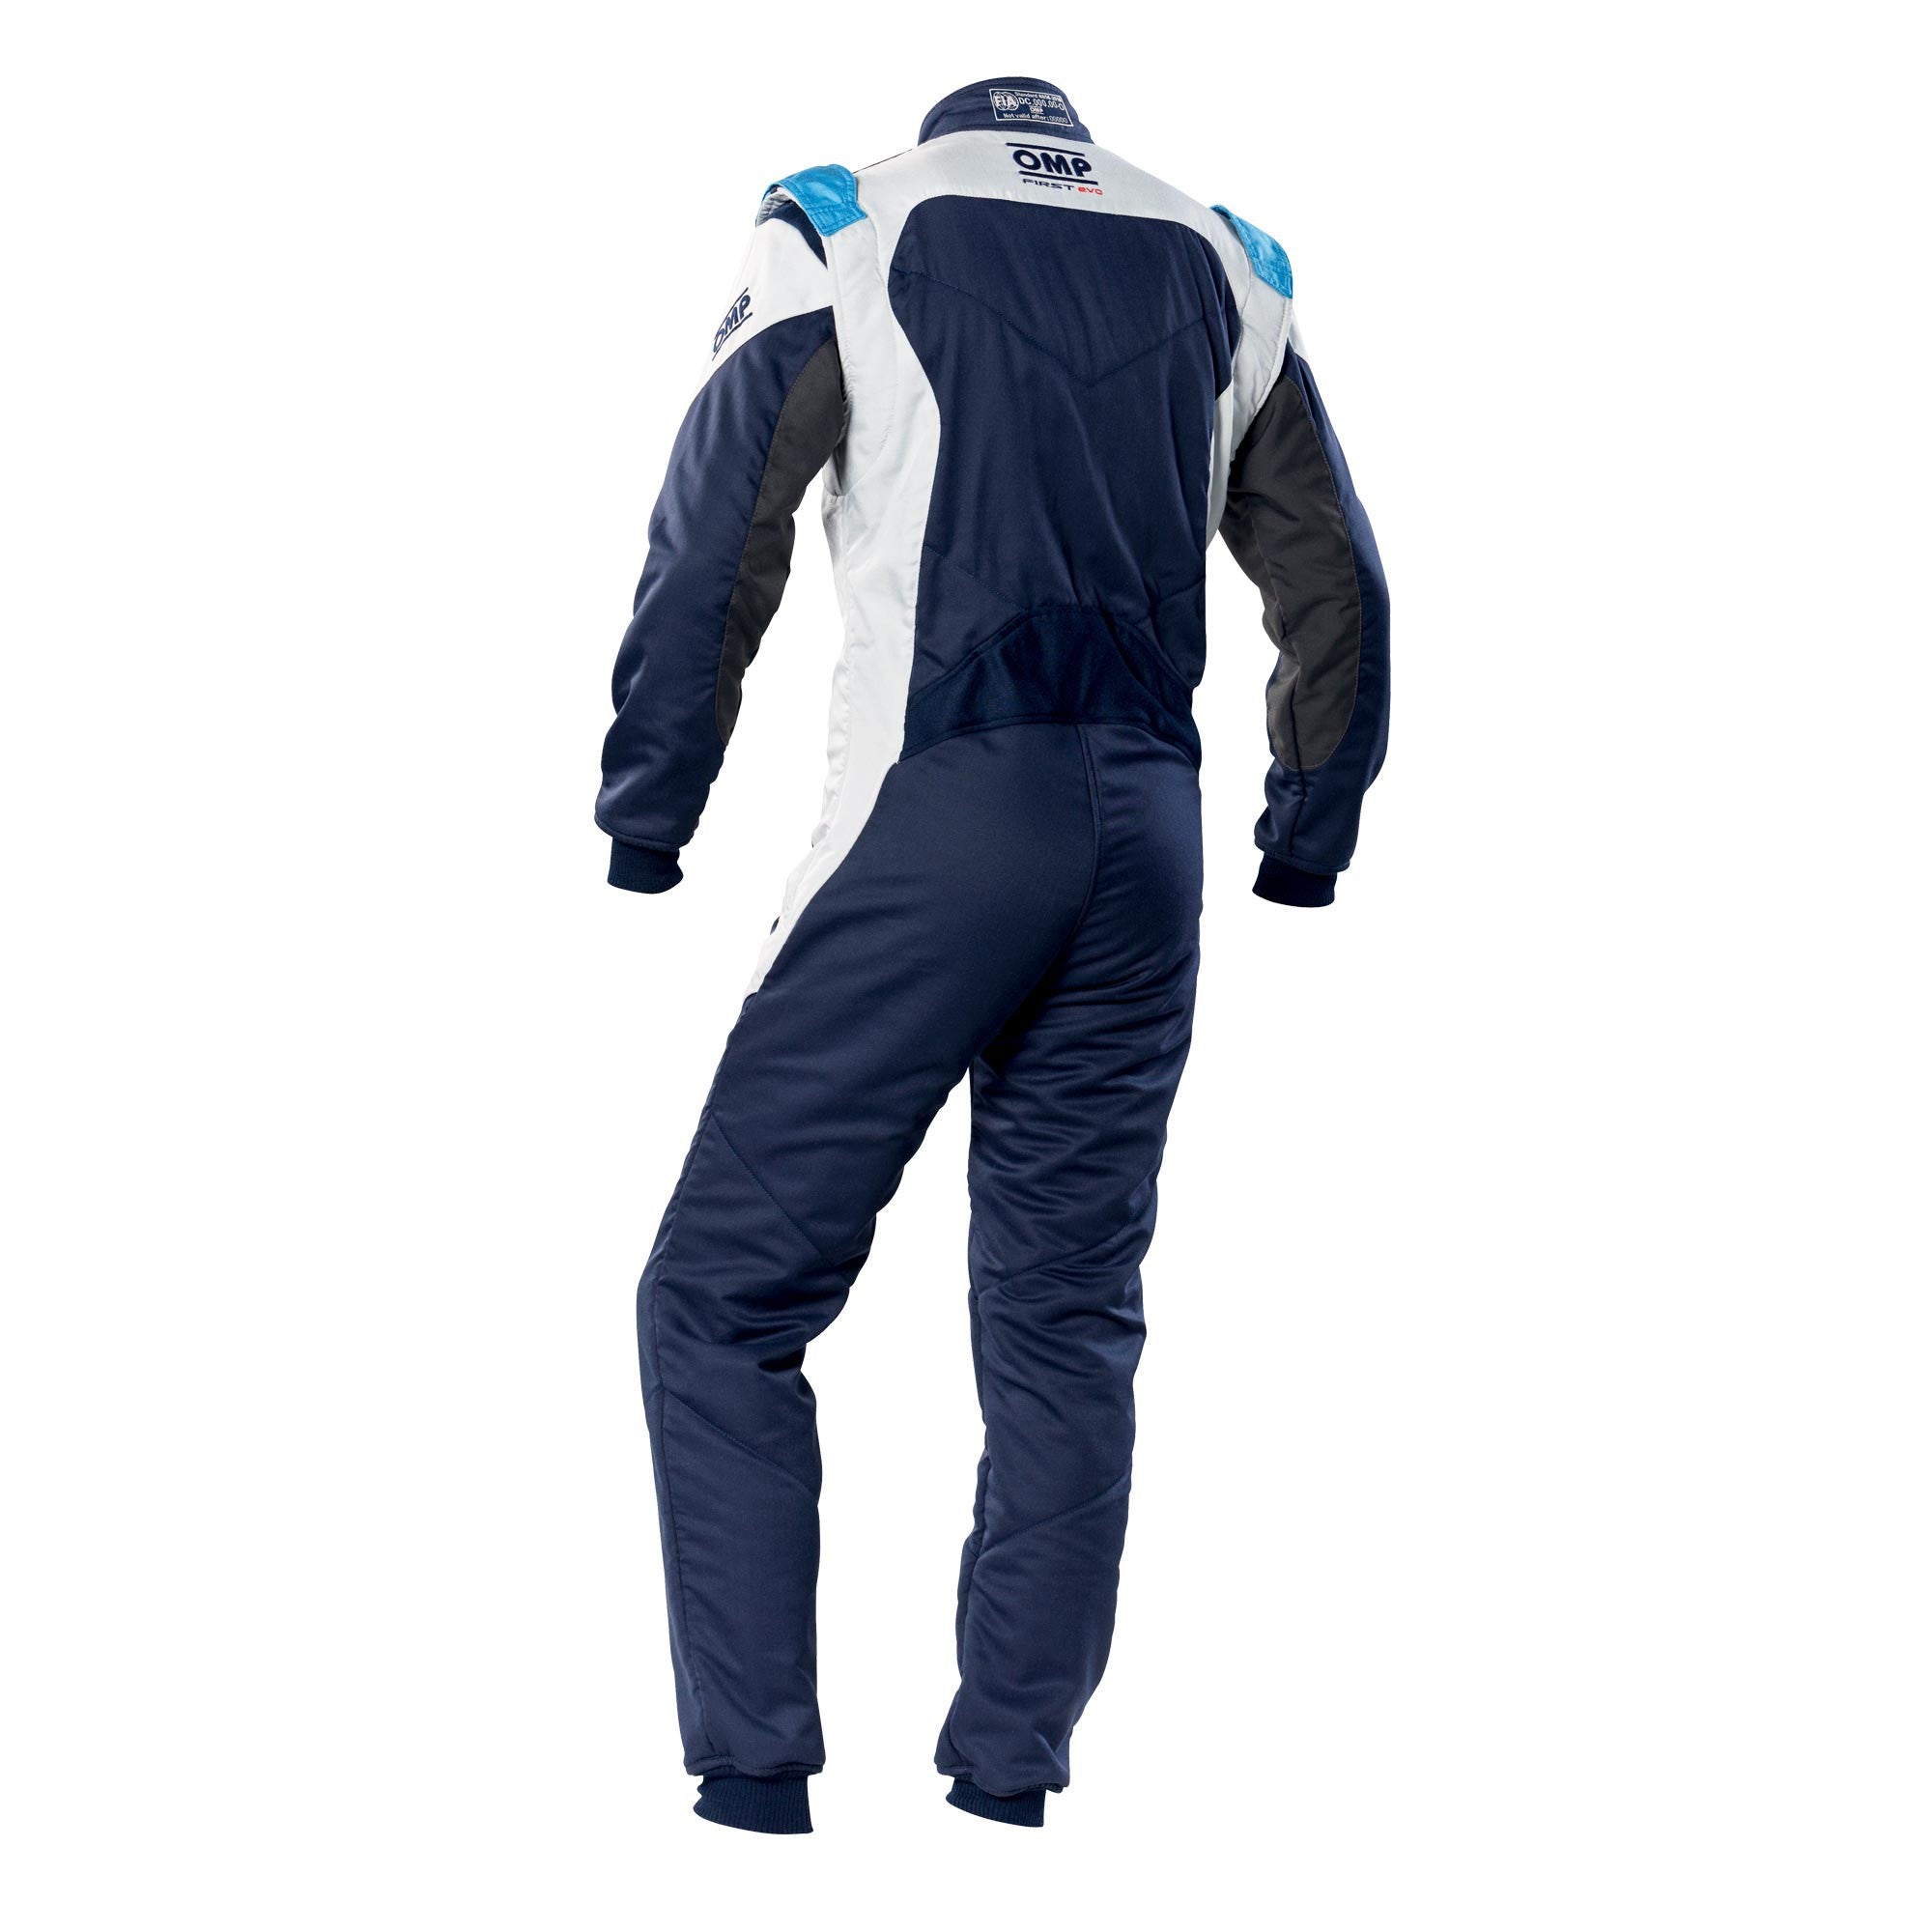 OMP One Evo X Suit – Winding Road Racing